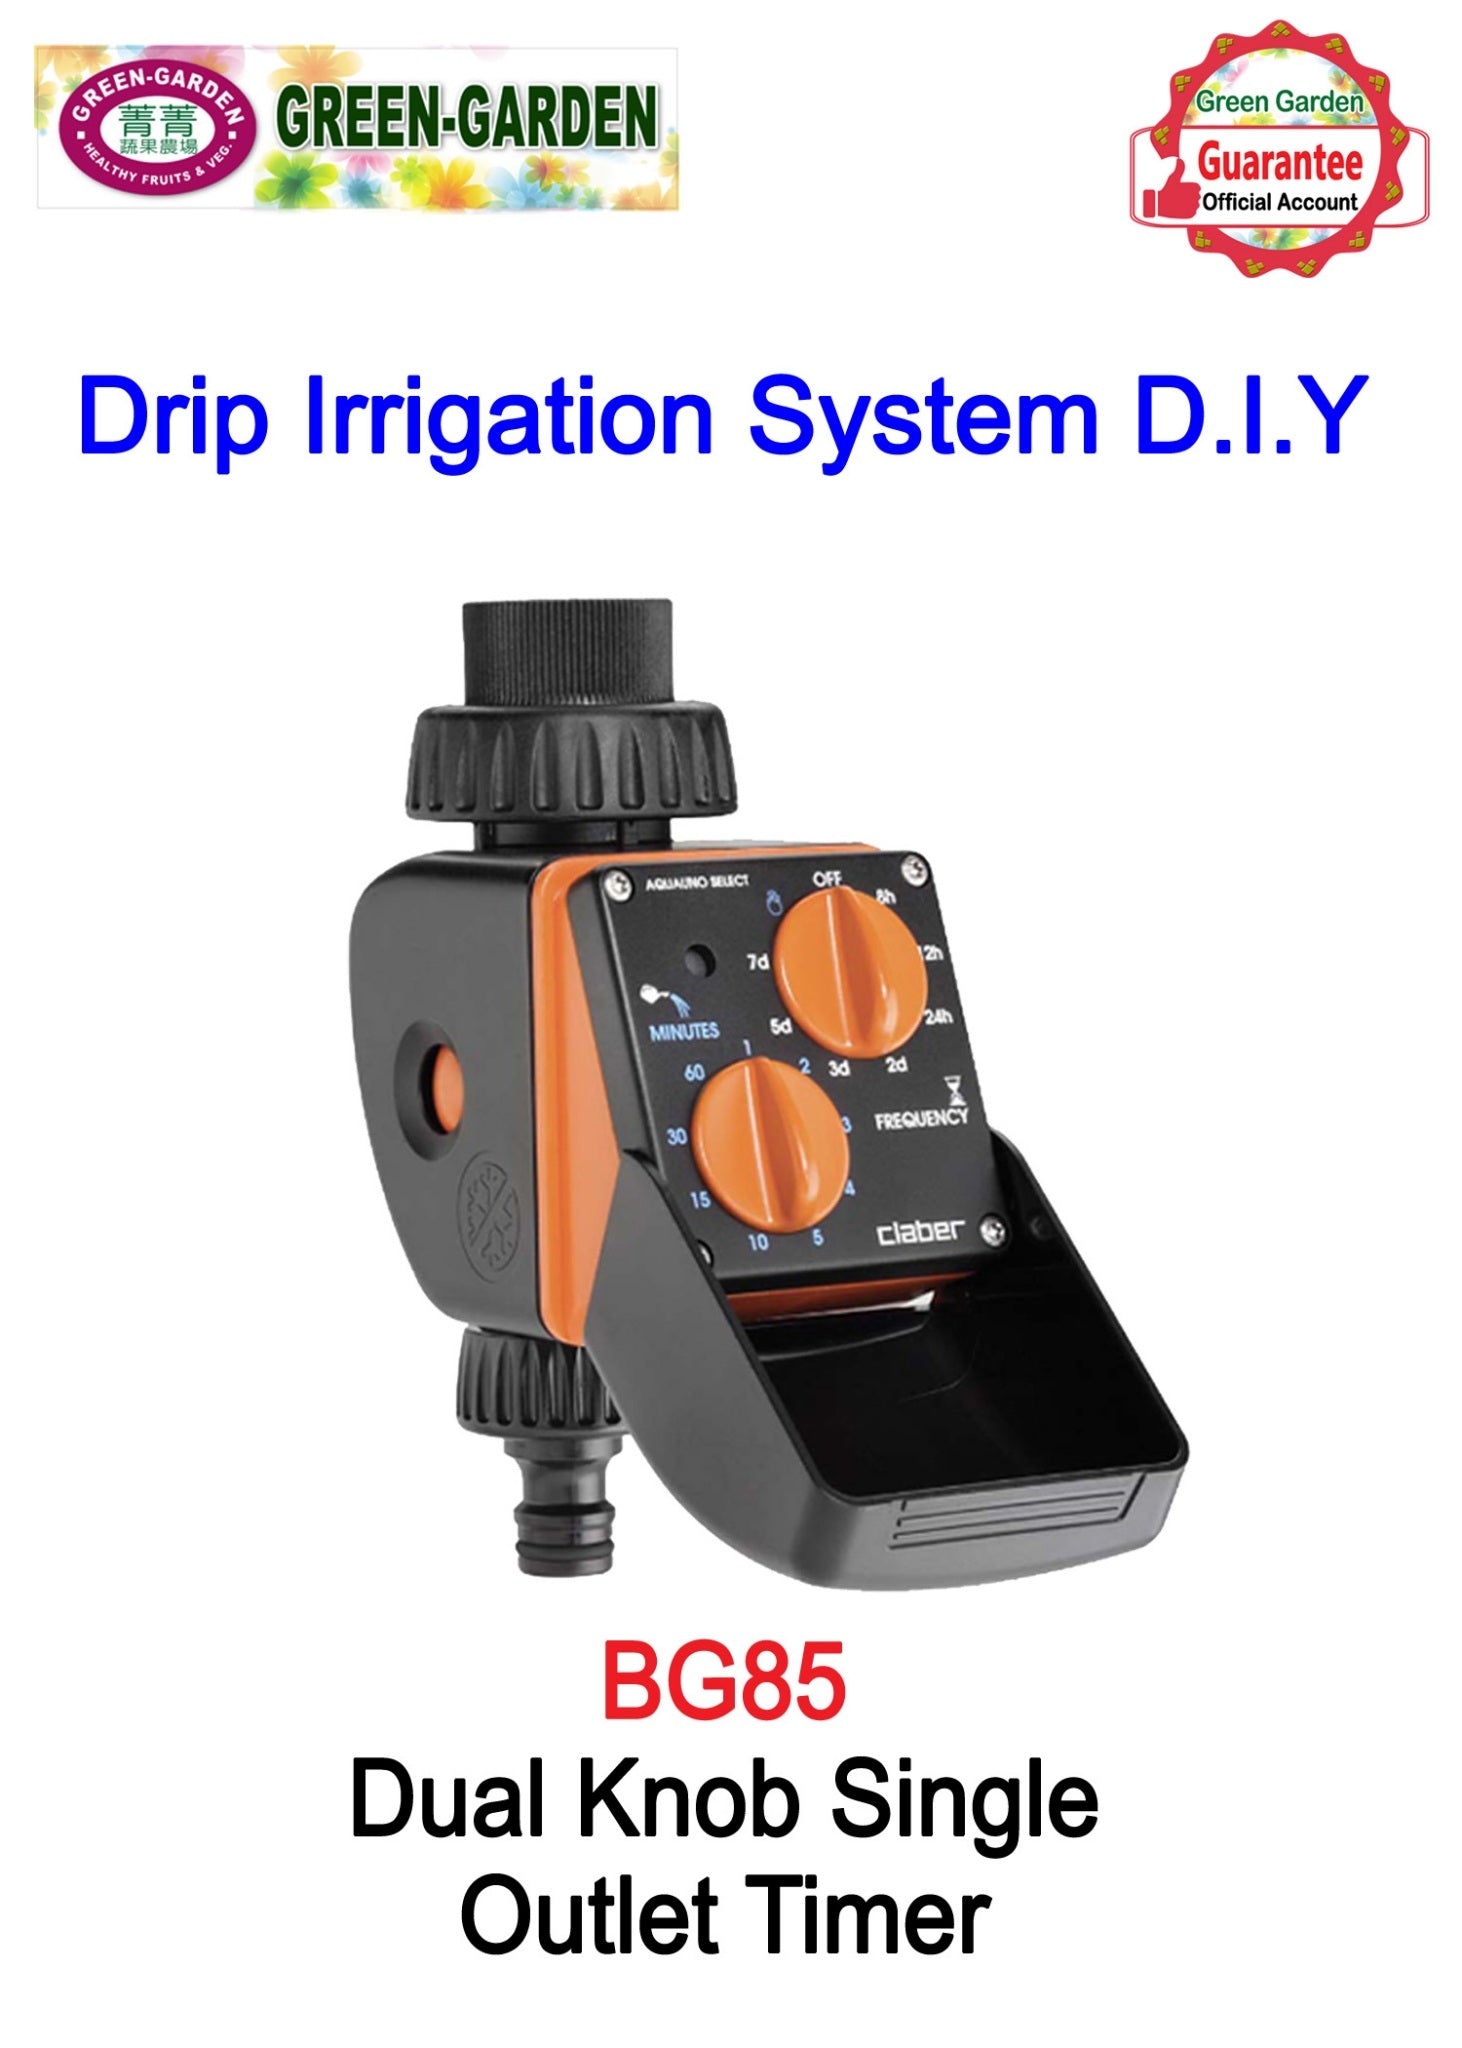 Drip Irrigation System - Dual Knob Single Spout Timer BG85